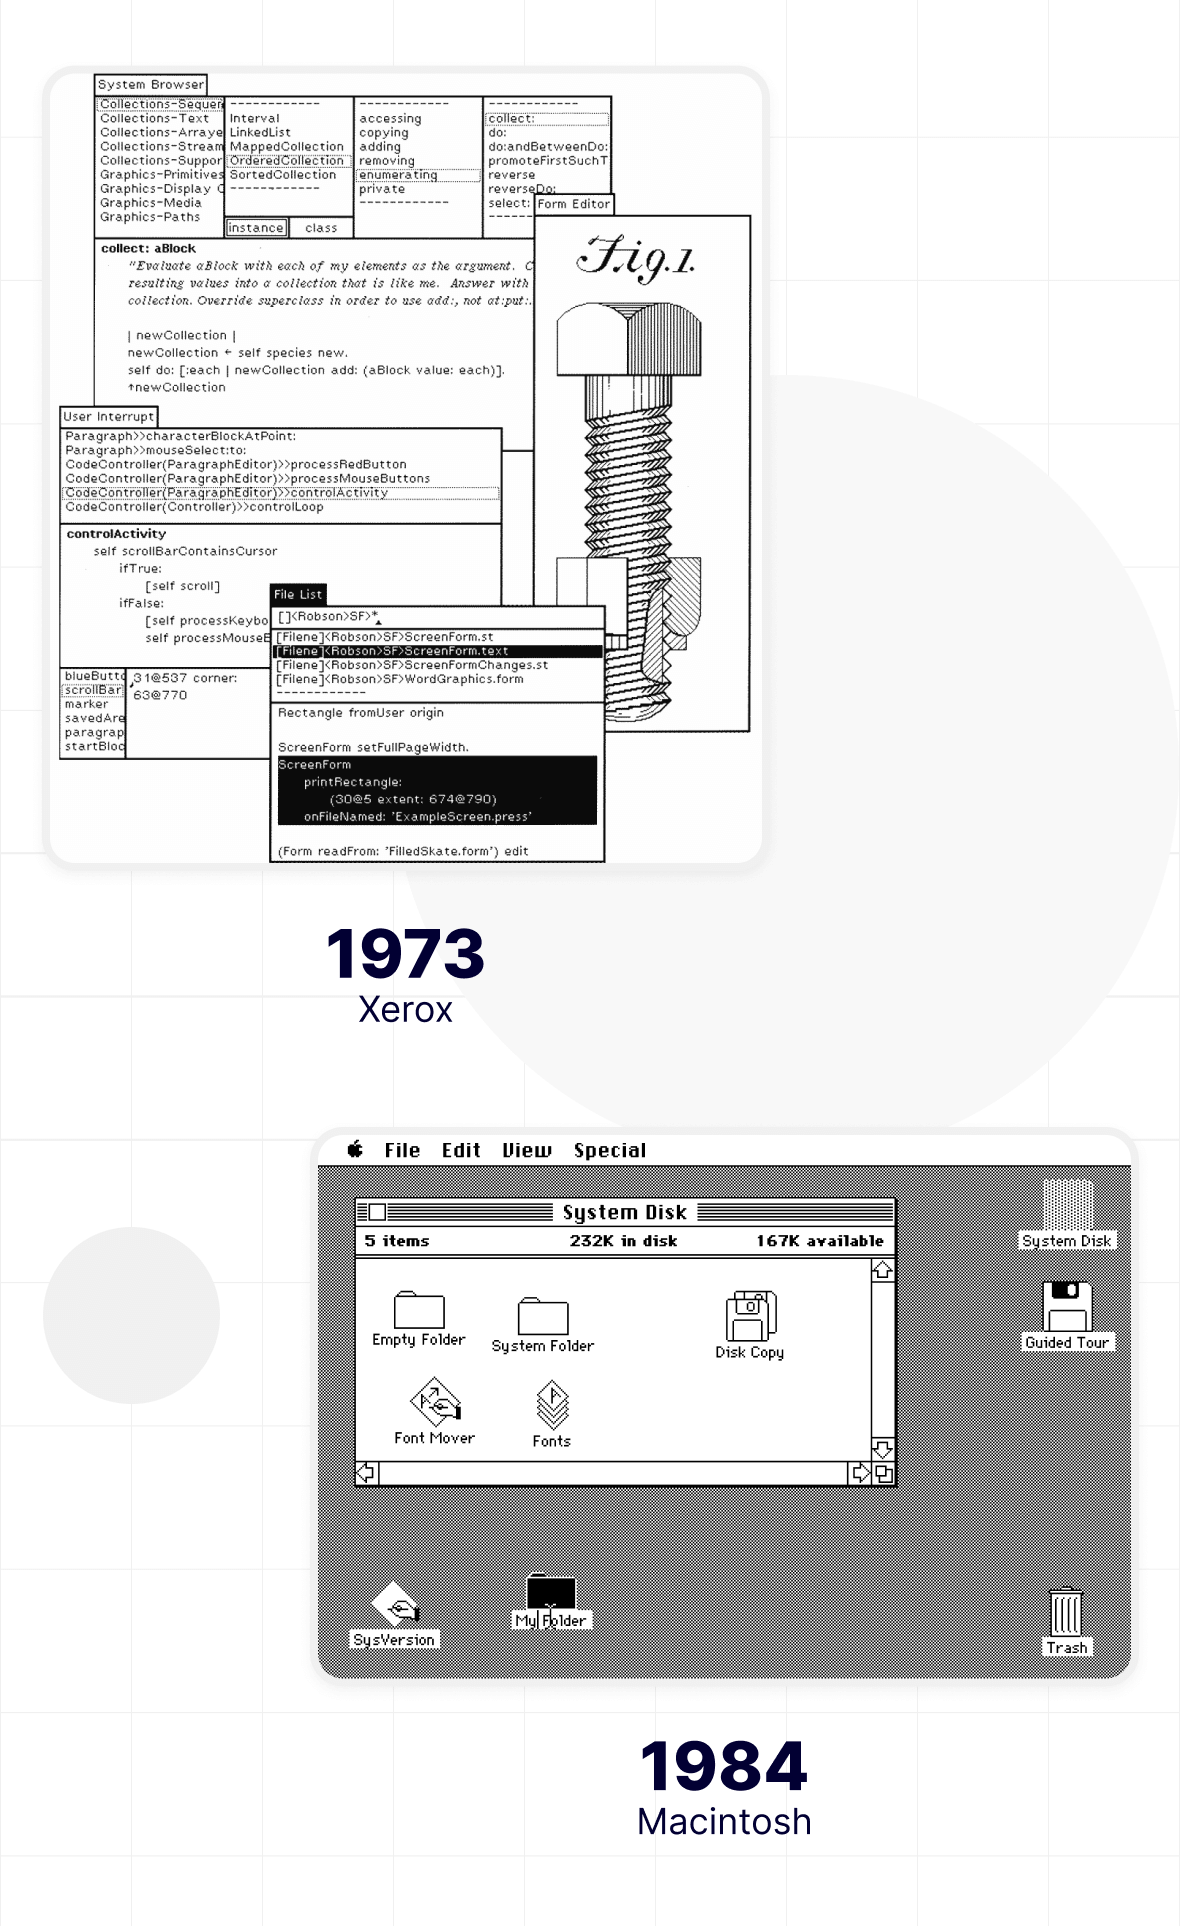 Xerox 1973 - Macintosh 1984